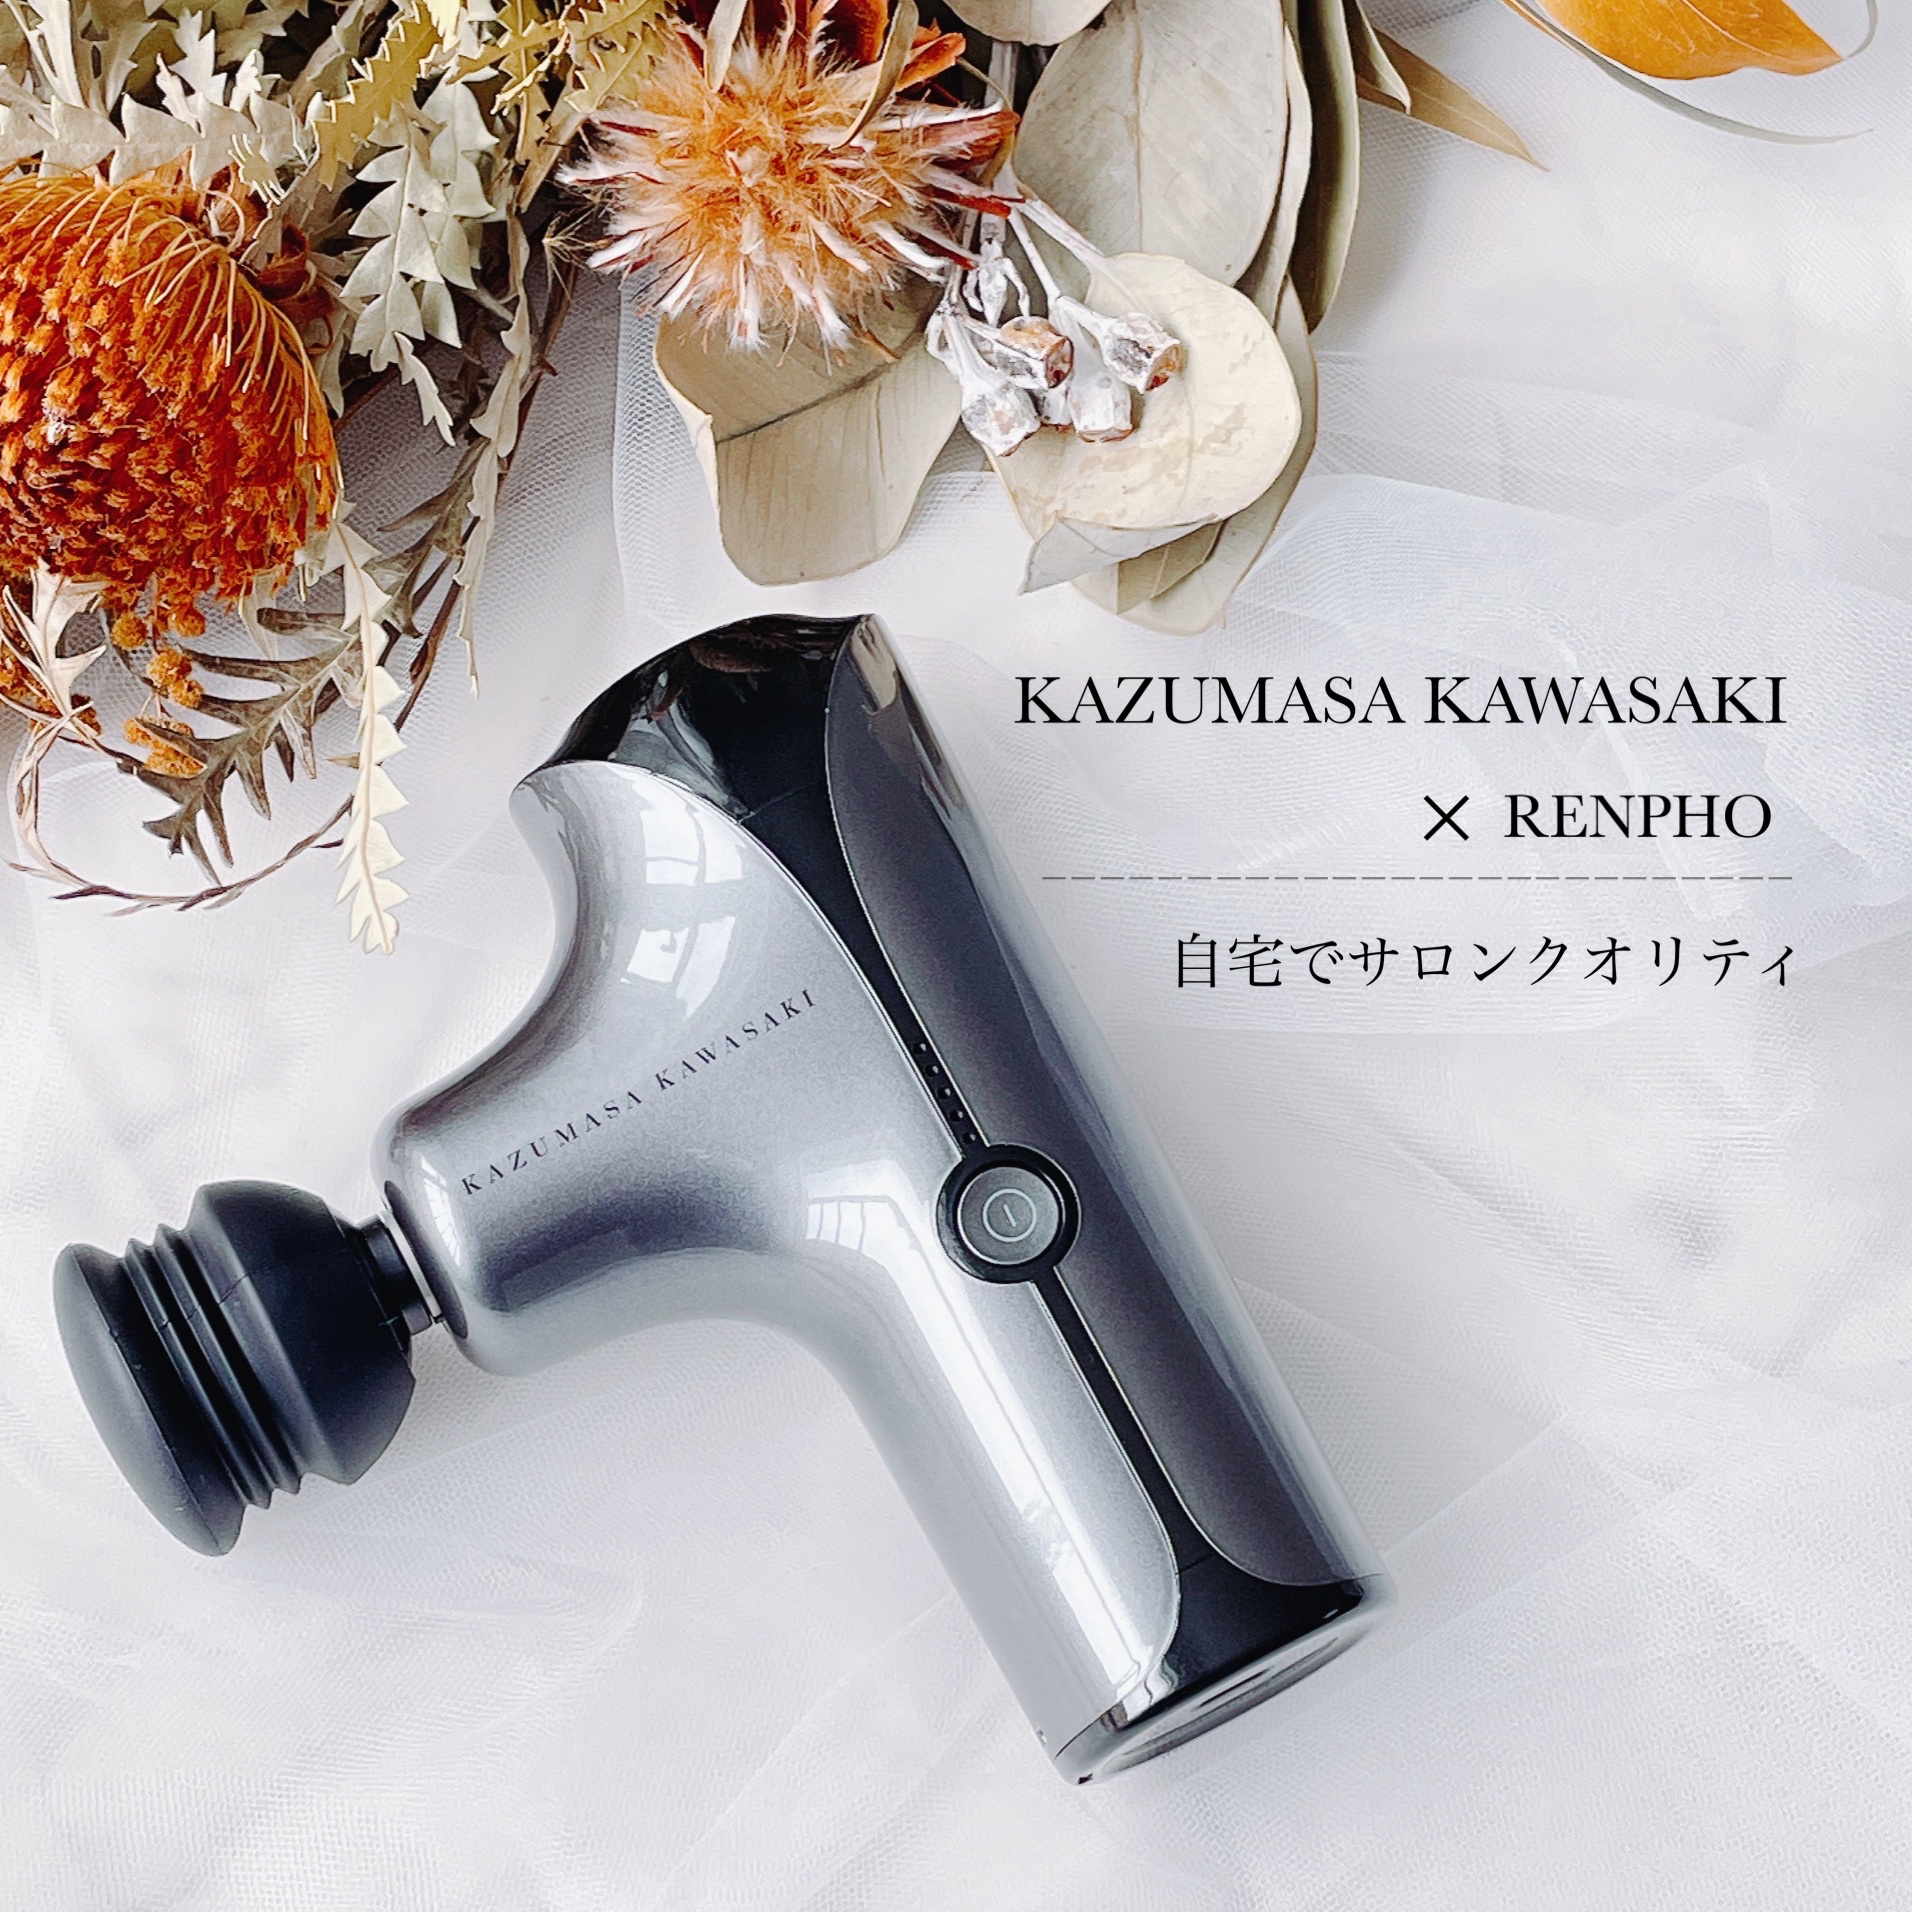 KAZUMASA KAWASAKI CVT マシーン by RENPHO アg - 美容機器